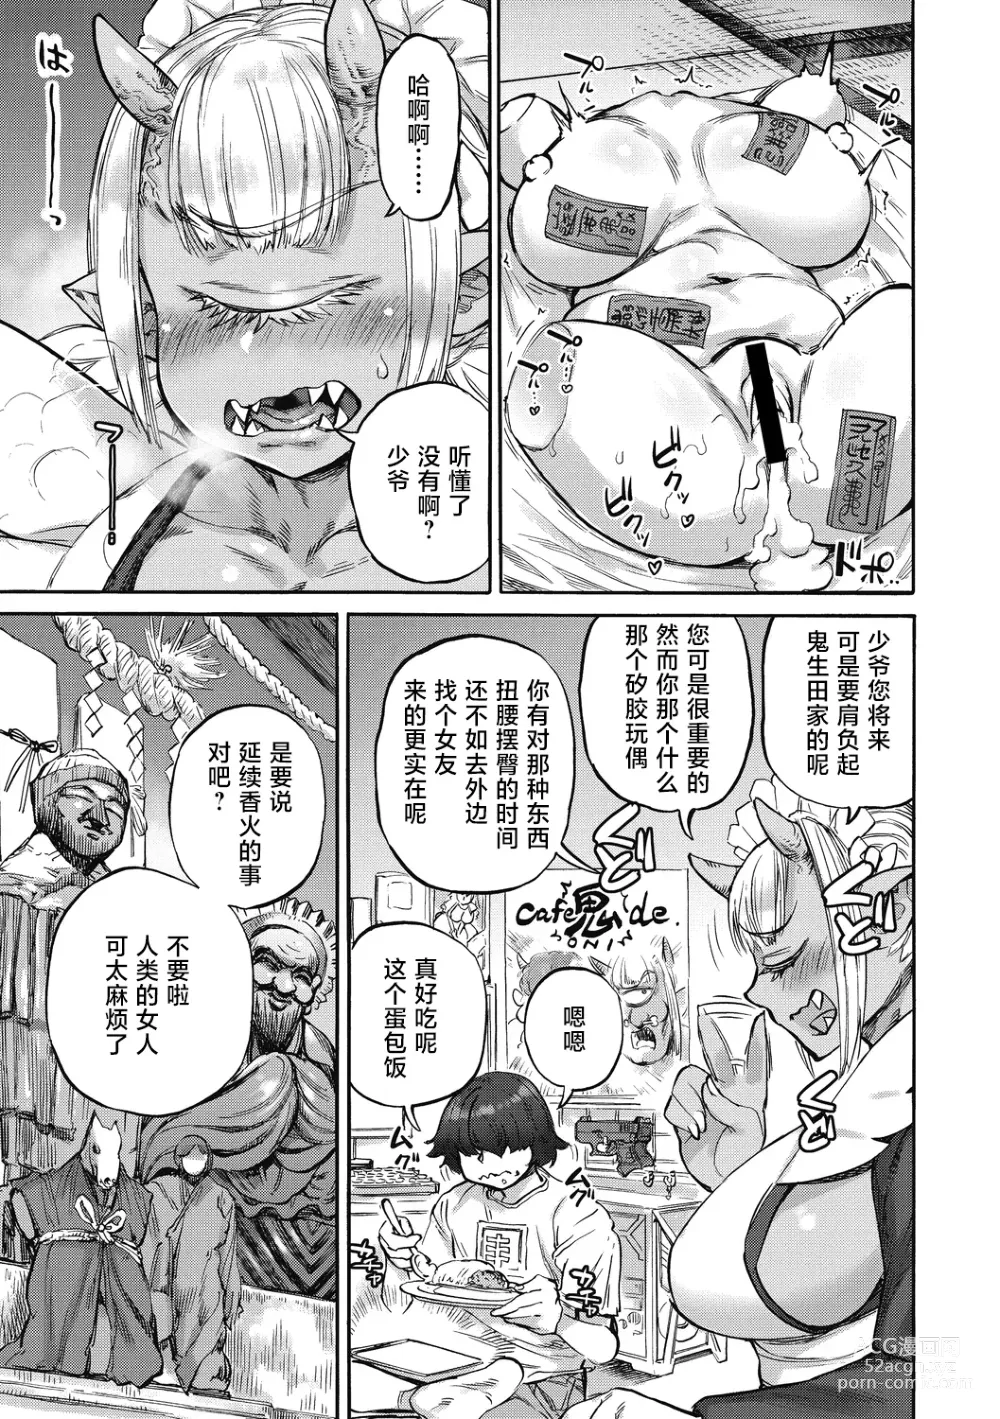 Page 7 of manga Ayame no Noroi